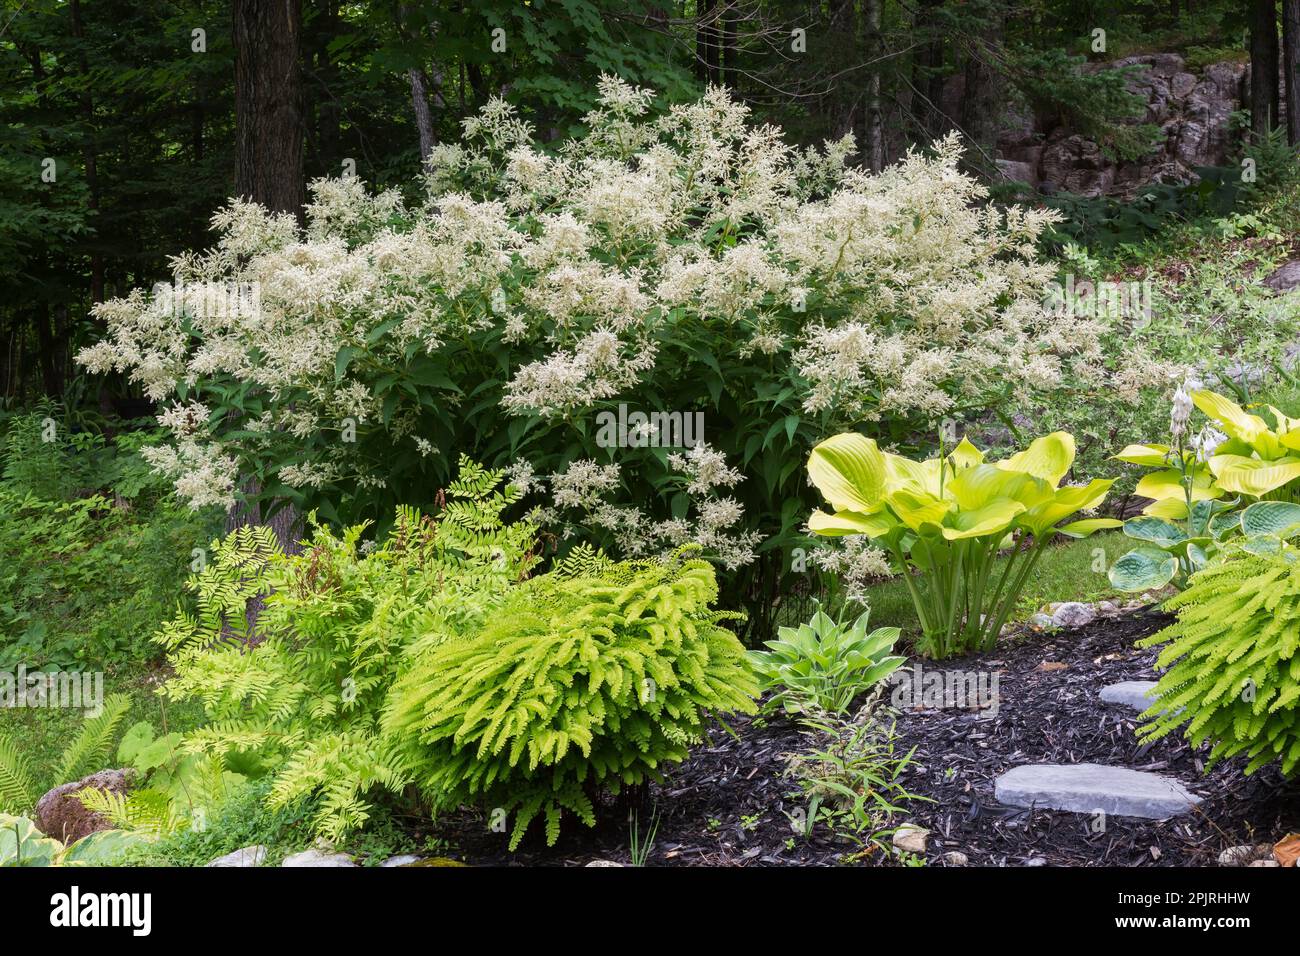 Adiantum pedatum - American Maidenhair Fern, Hosta and Persicaria polymorpha - Fleeceflower in rock edged border in backyard garden in spring. Stock Photo